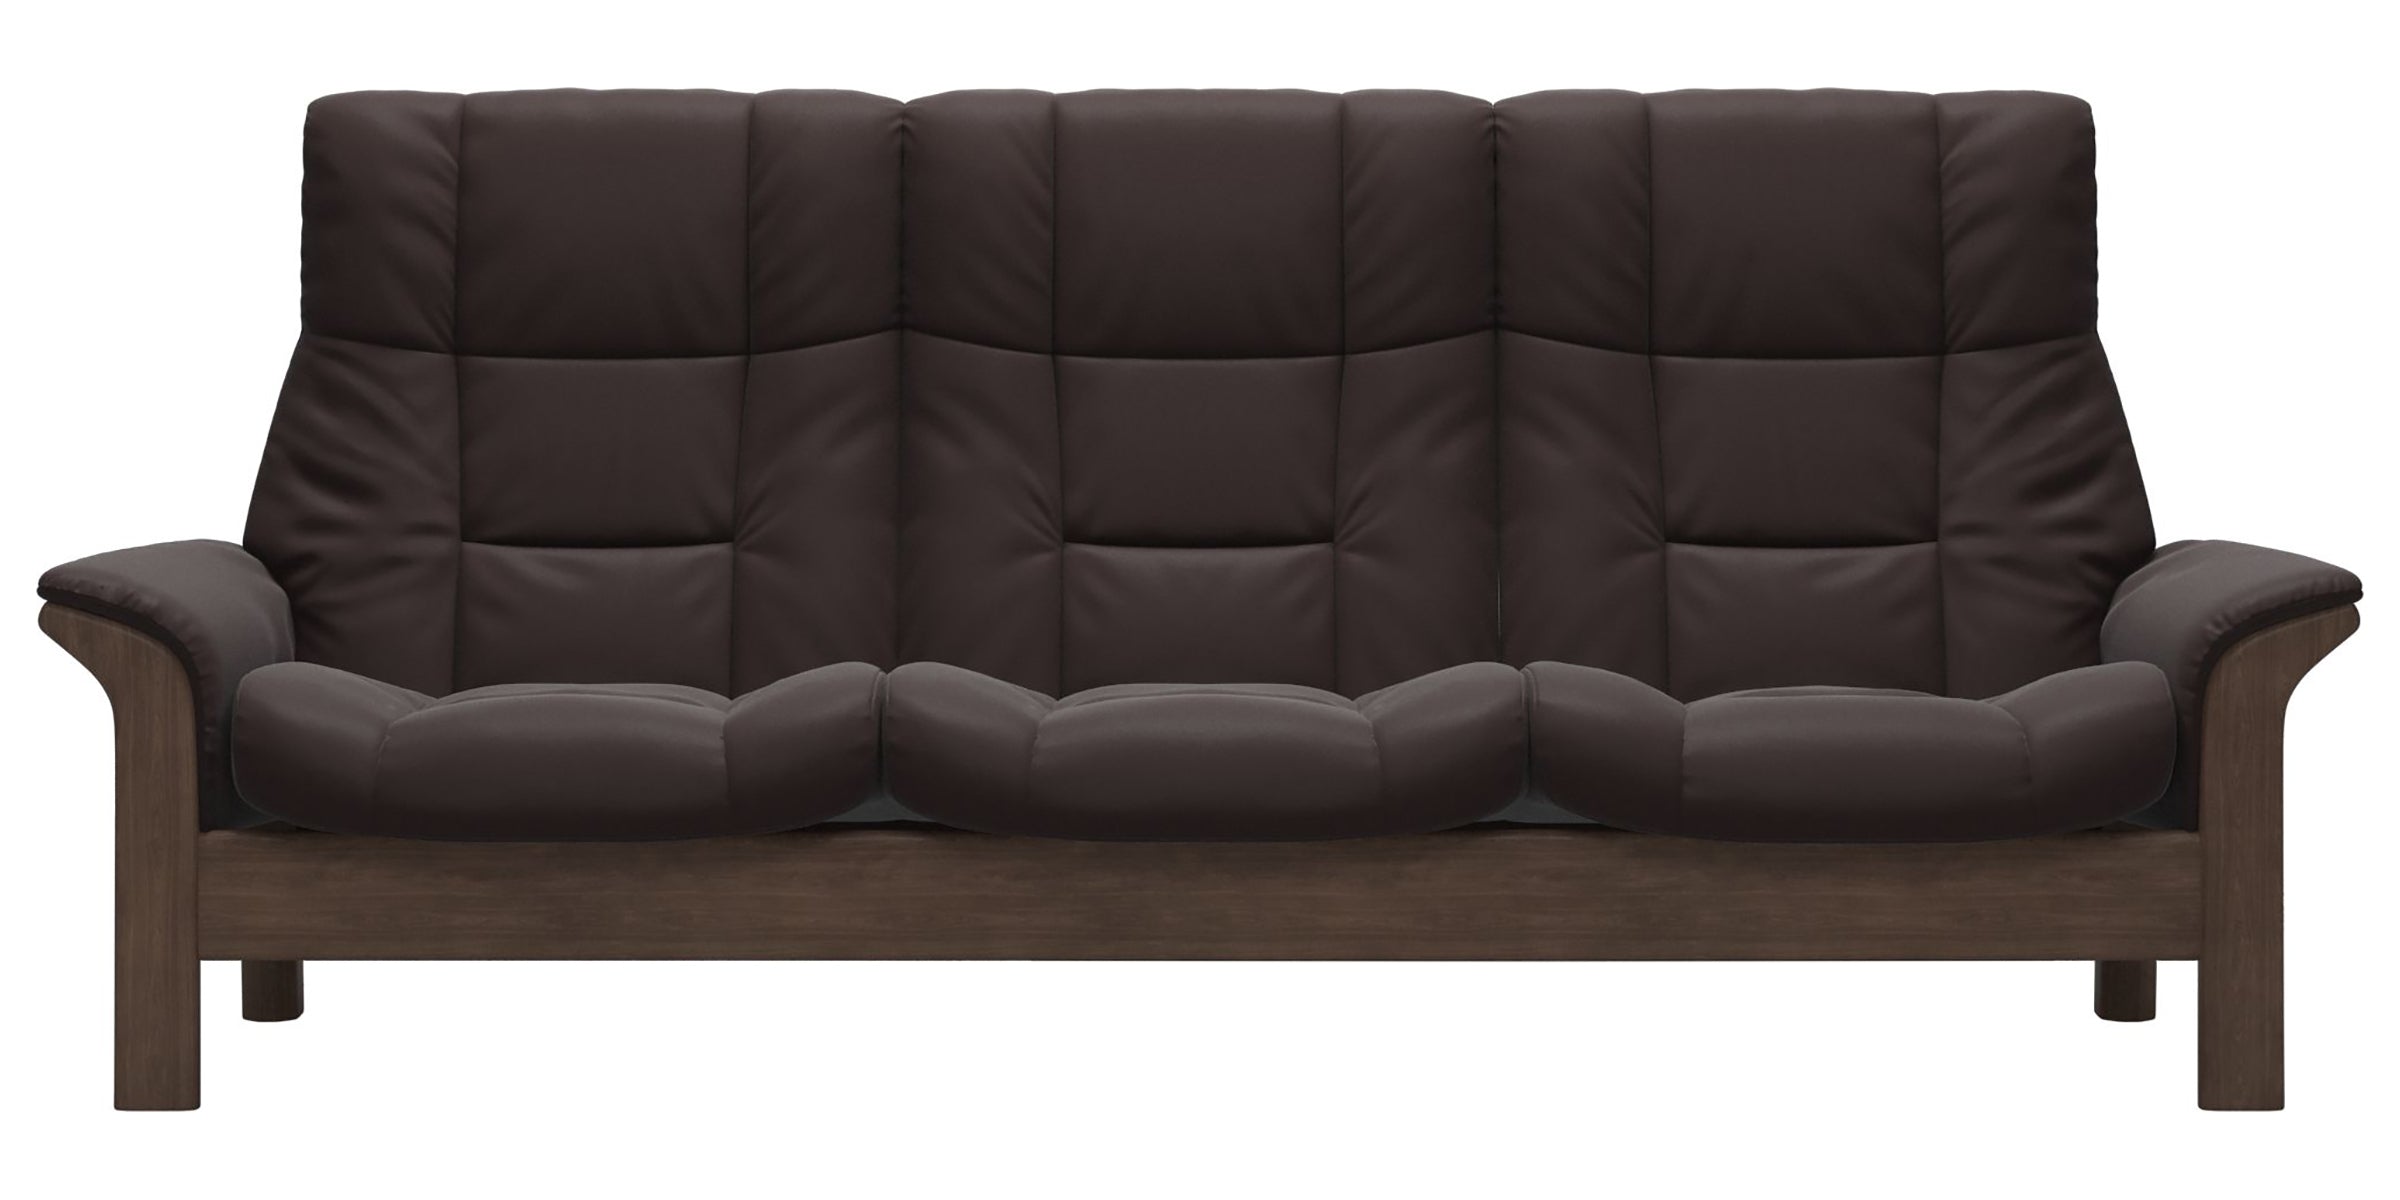 Paloma Leather Chocolate and Walnut Base | Stressless Buckingham 3-Seater High Back Sofa | Valley Ridge Furniture